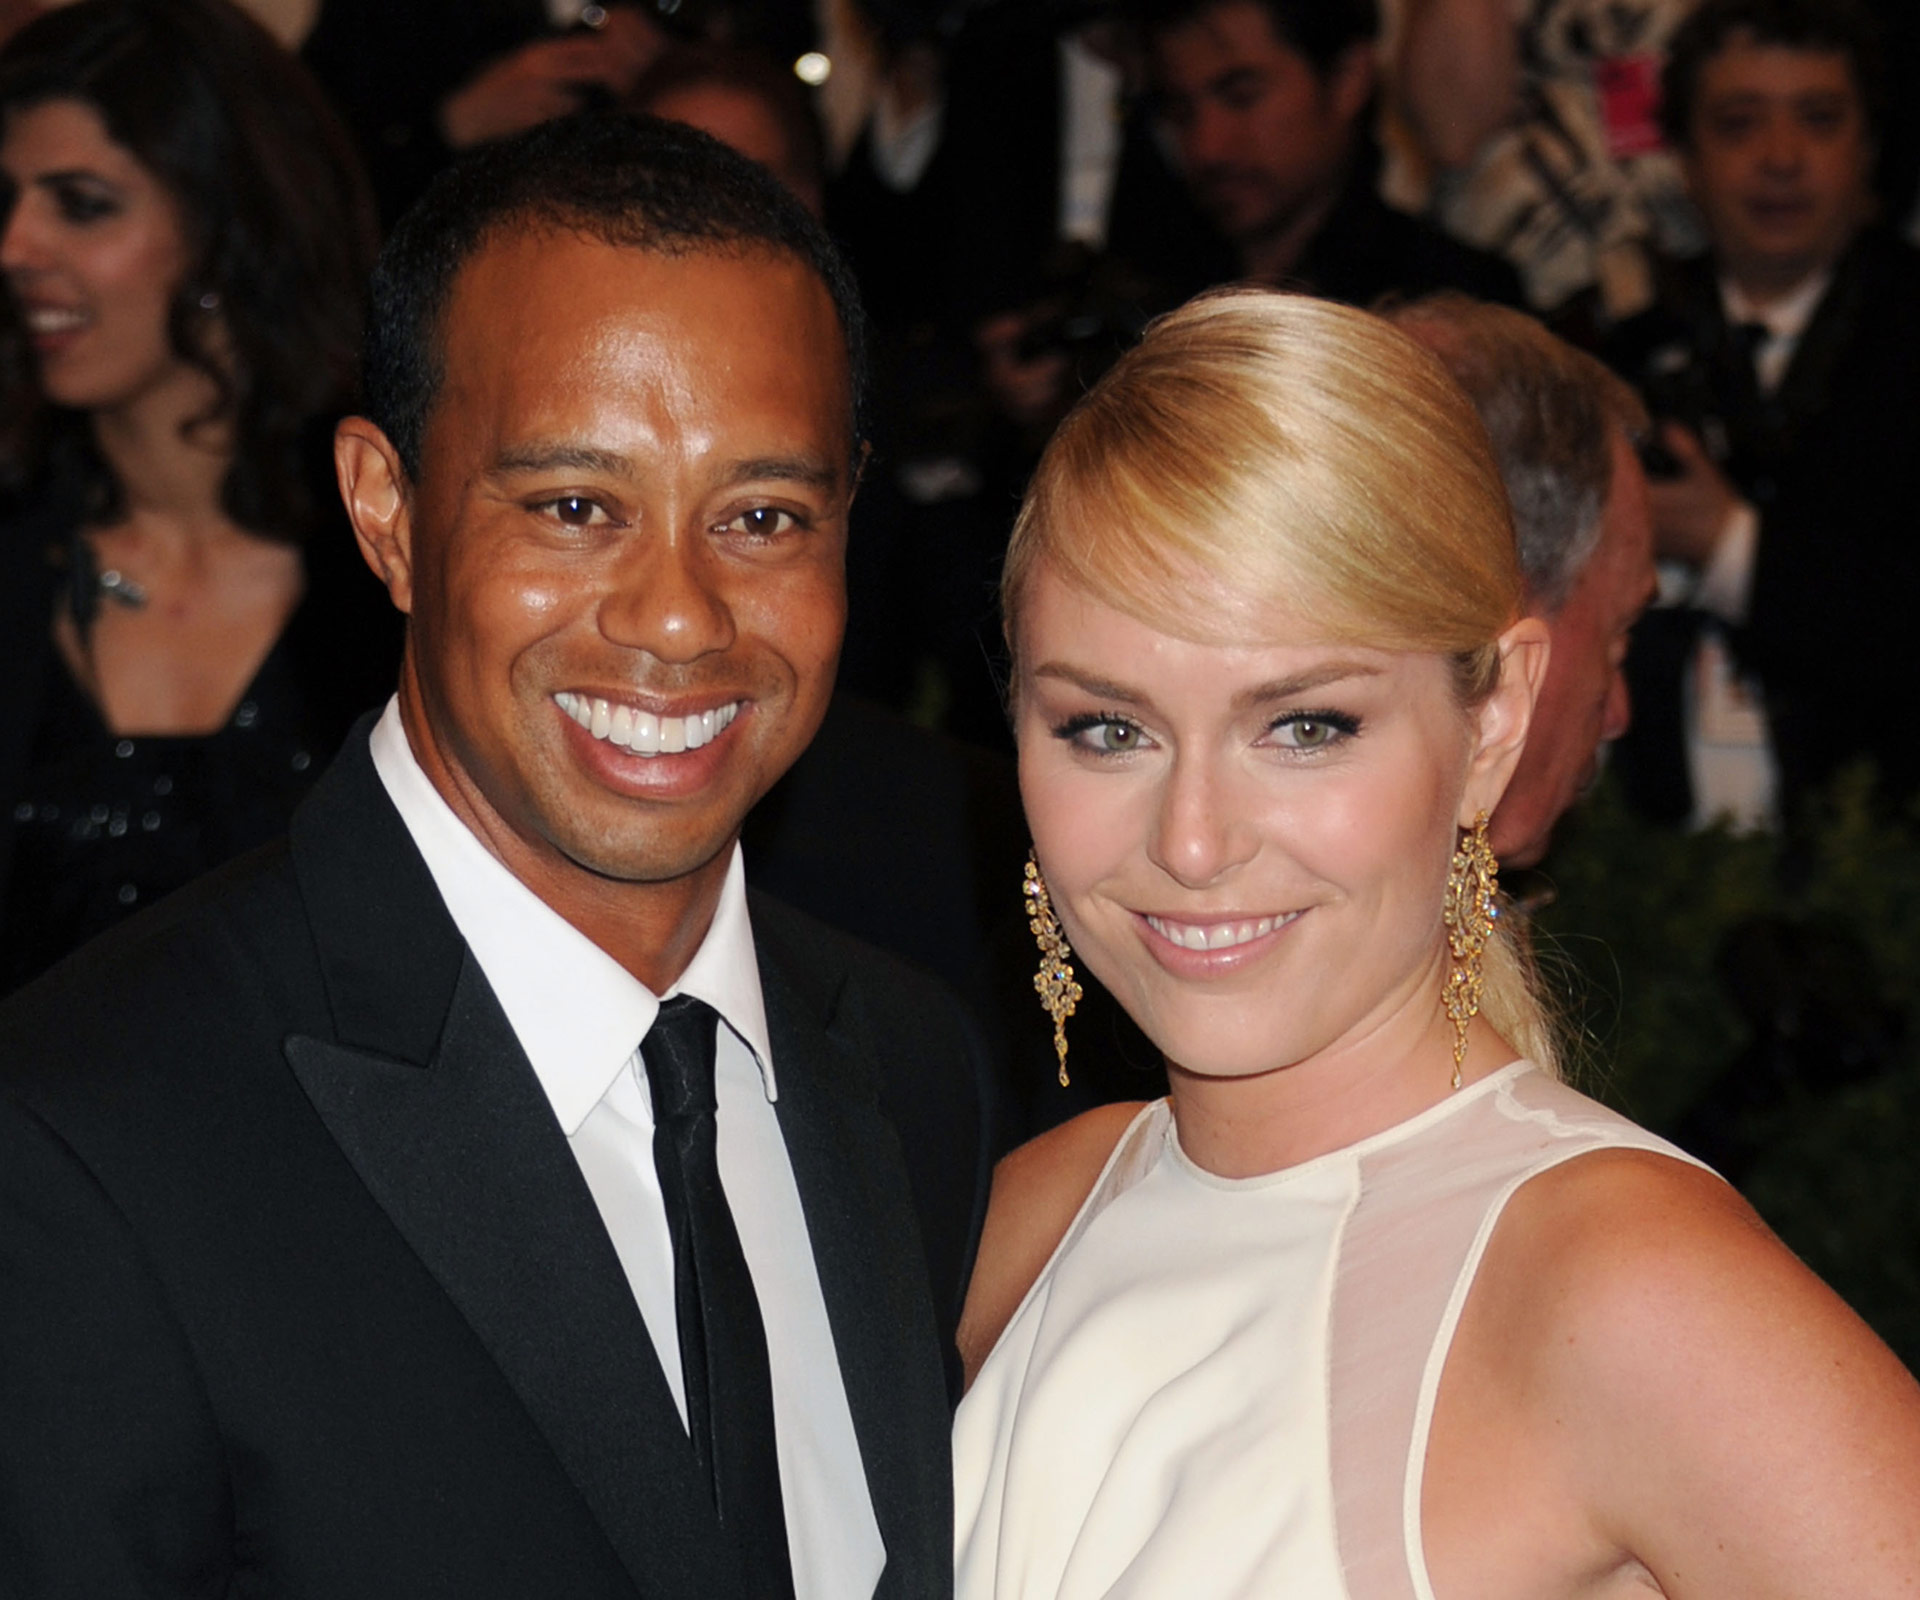 Golfer Tiger Woods and Olympic Skier Lindsay Vonn